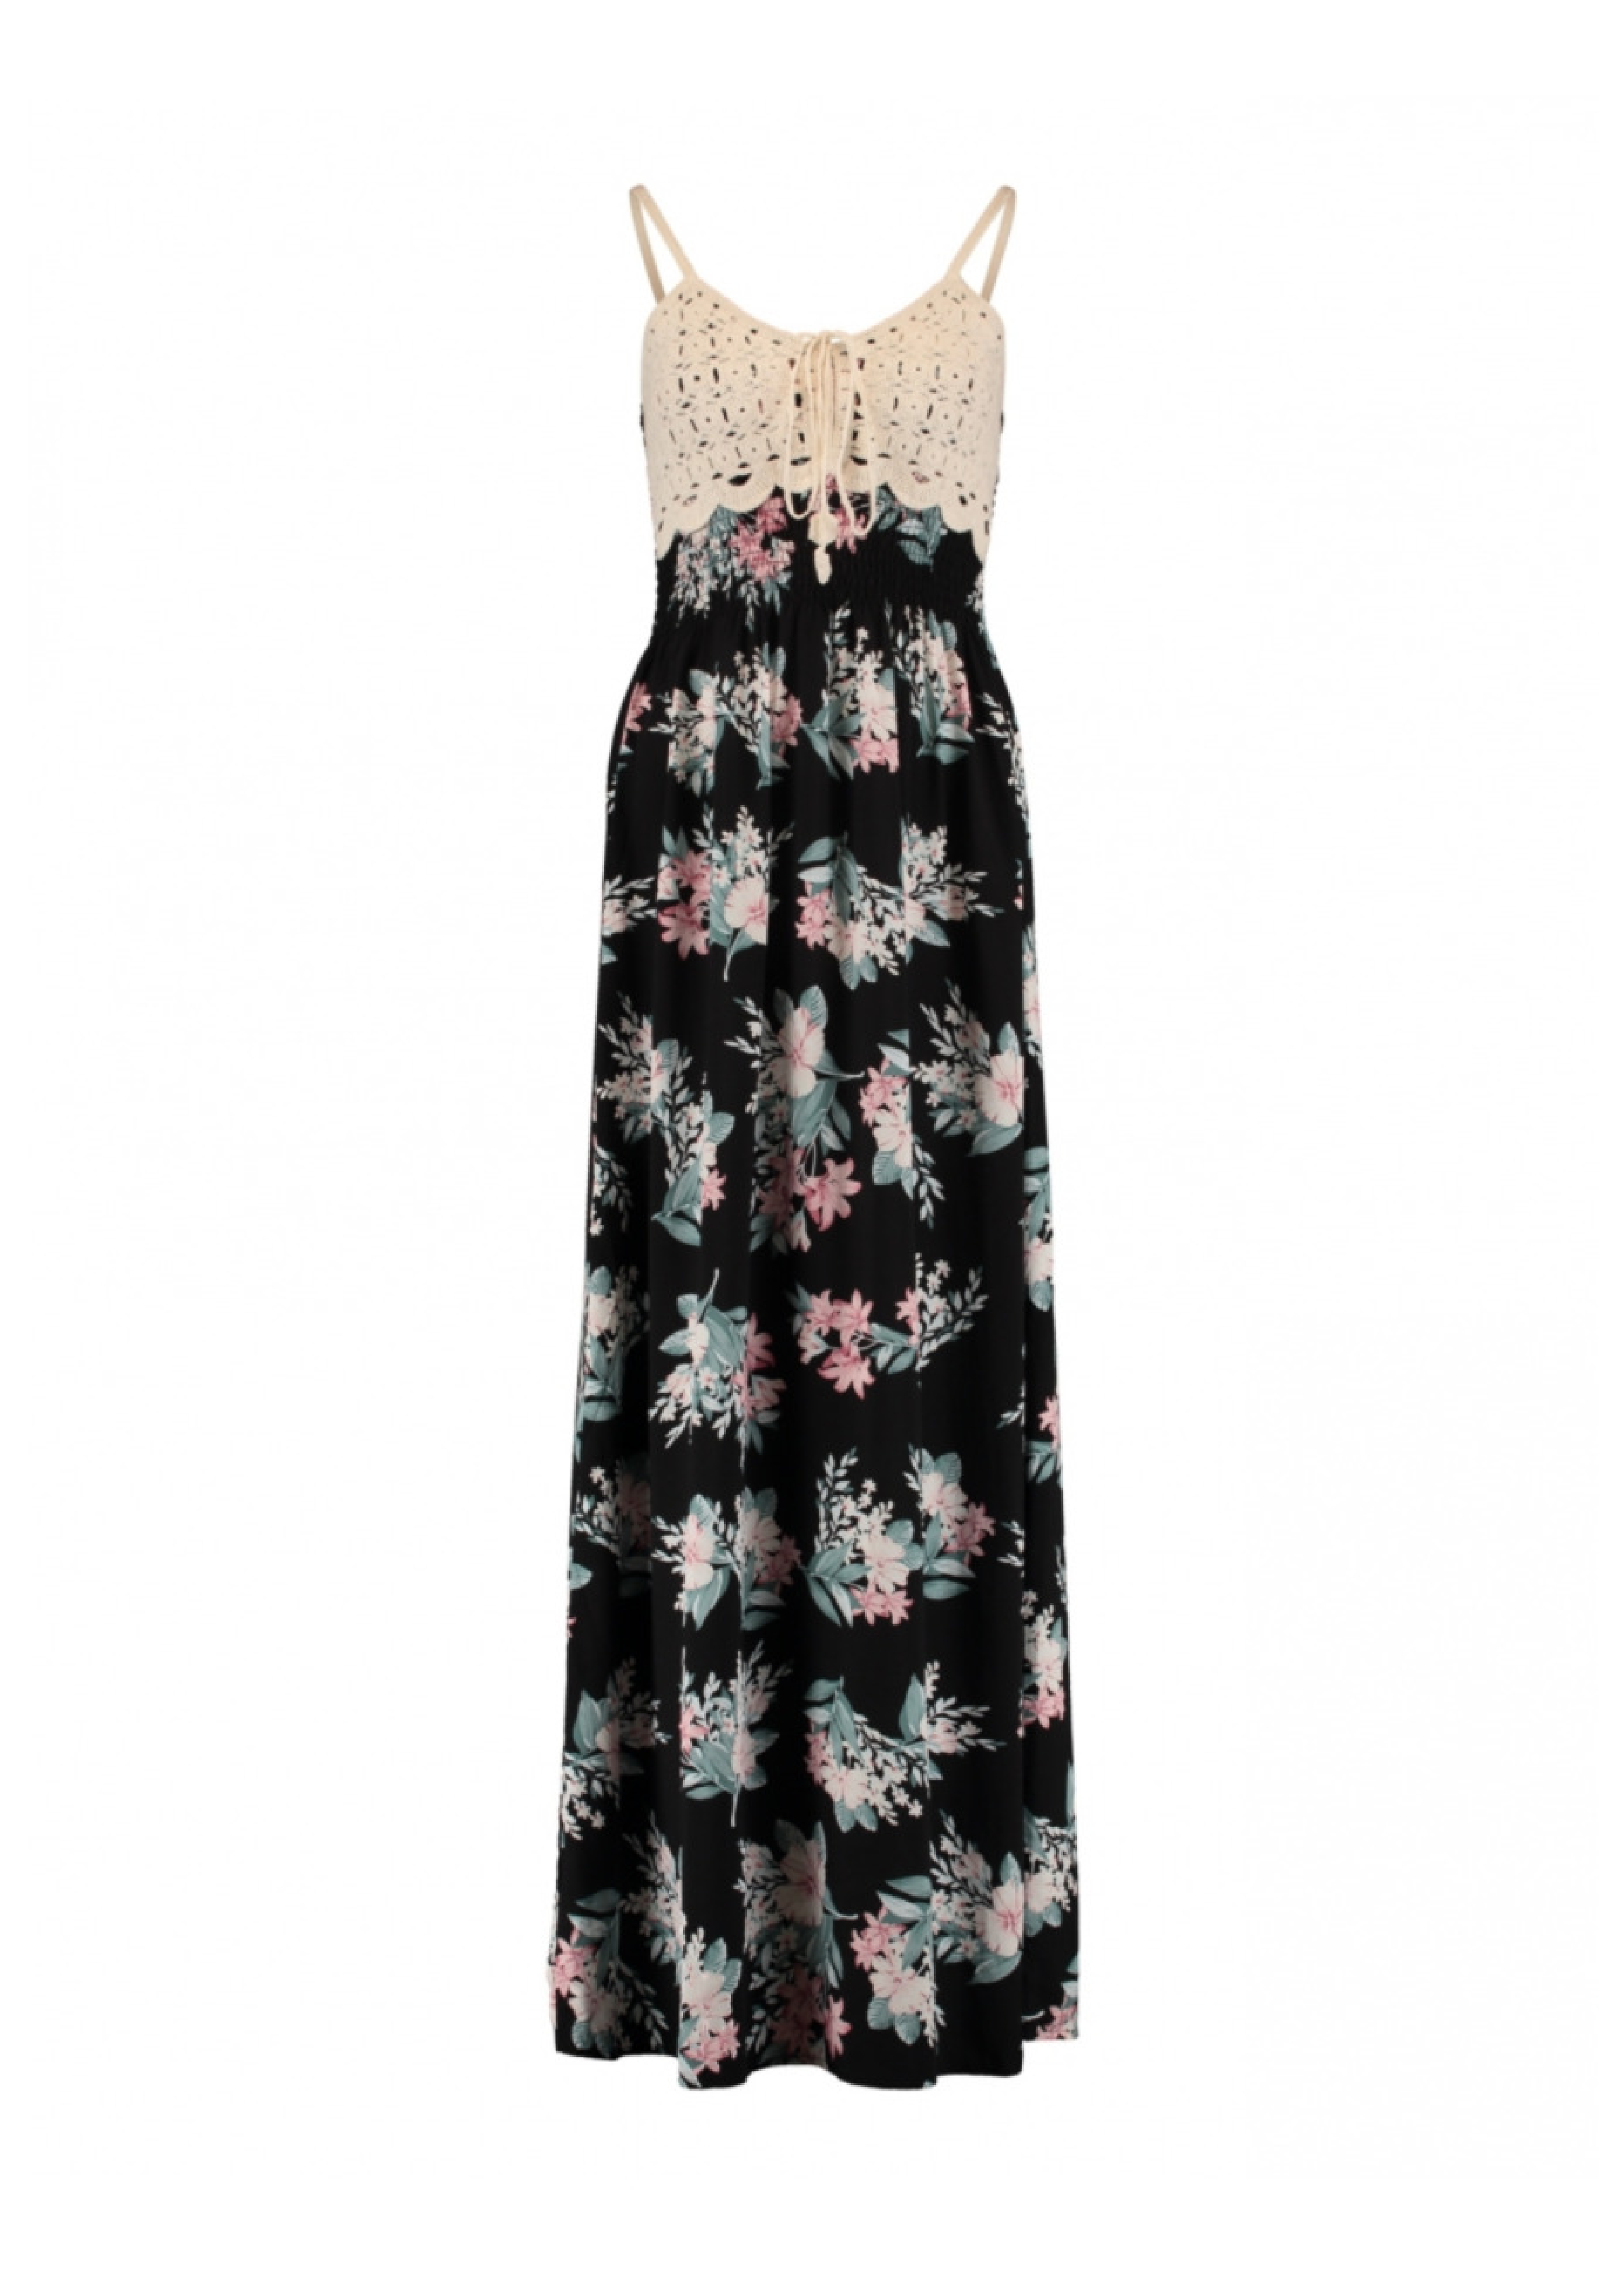 Kaja Black Floral Crochet Detail Dress